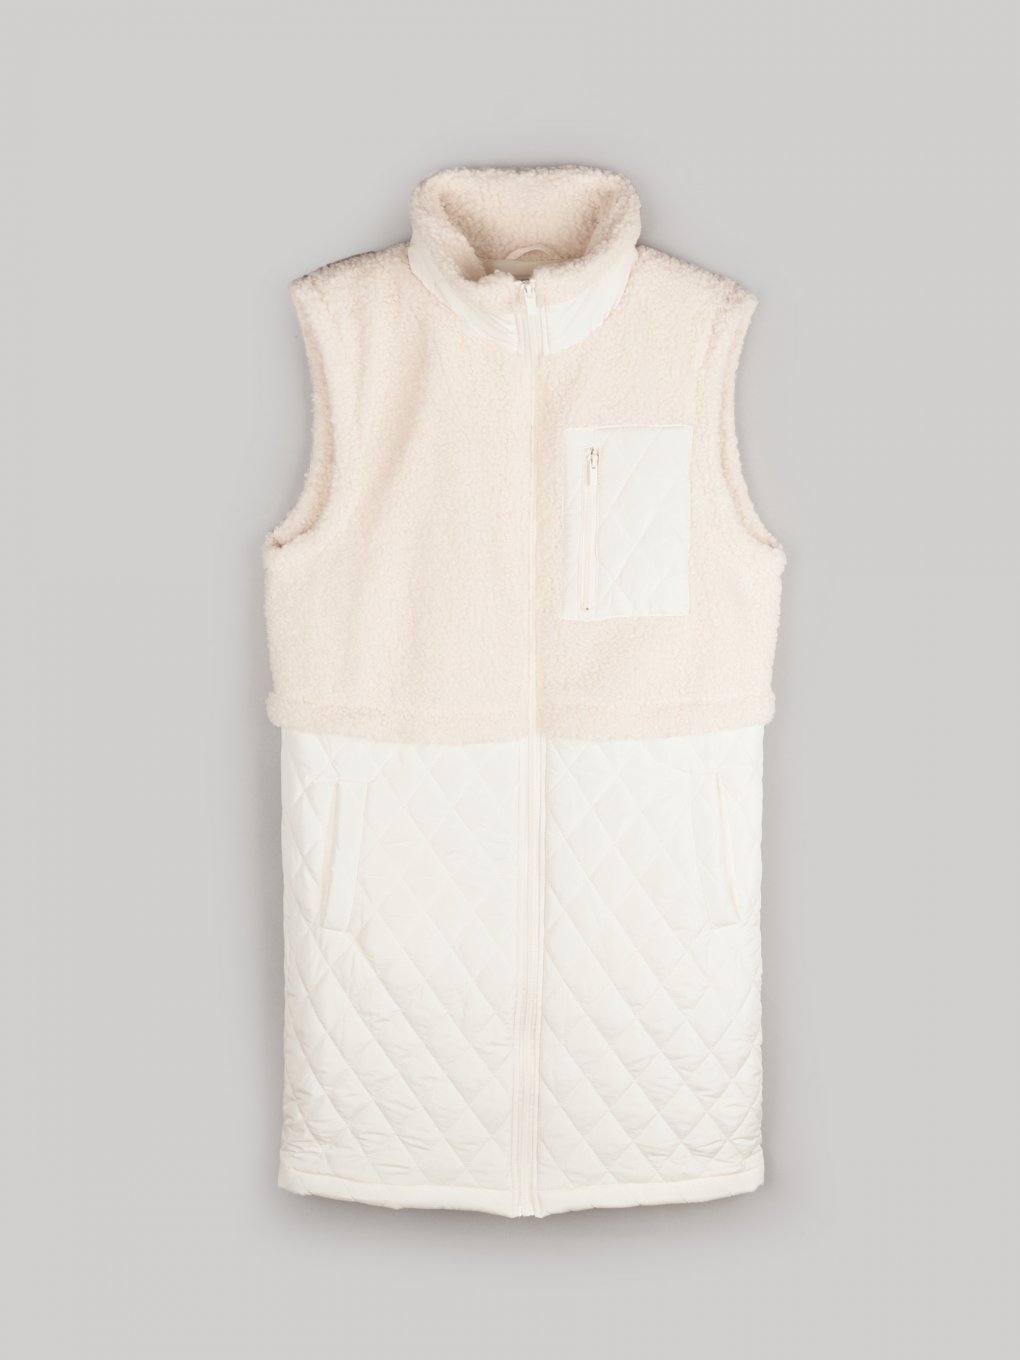 Combined longline vest